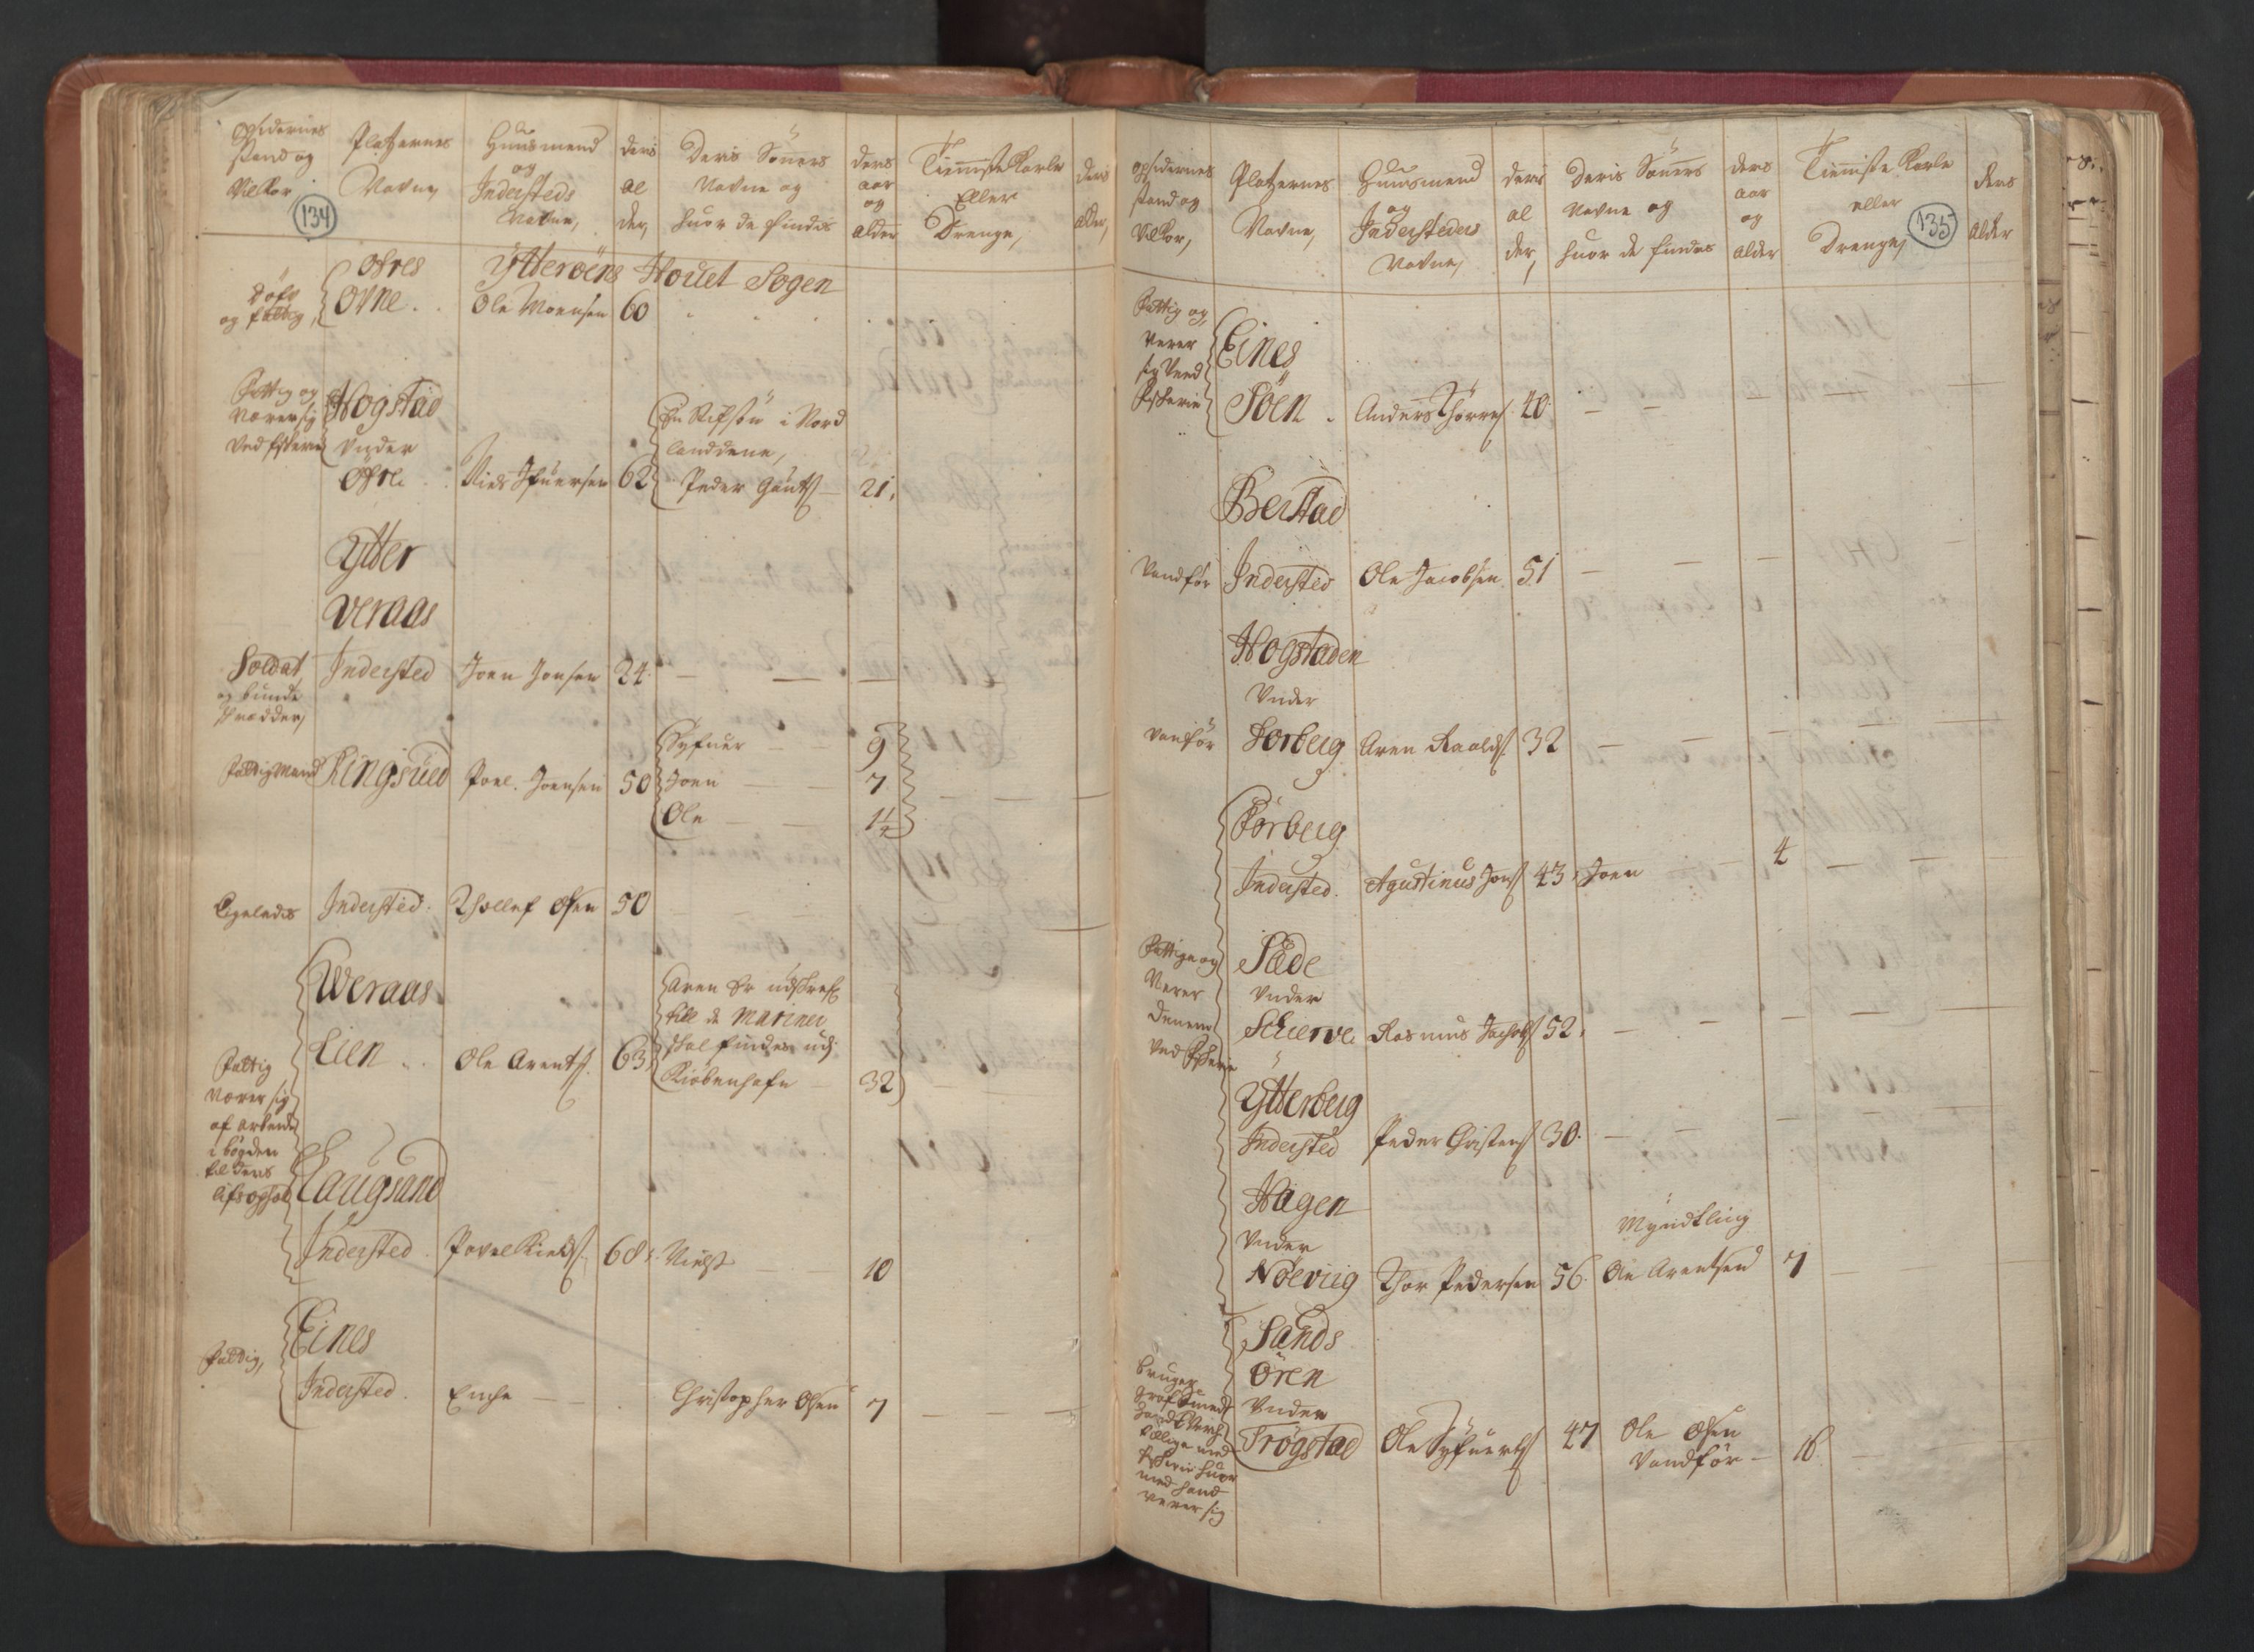 RA, Census (manntall) 1701, no. 15: Inderøy fogderi and Namdal fogderi, 1701, p. 134-135